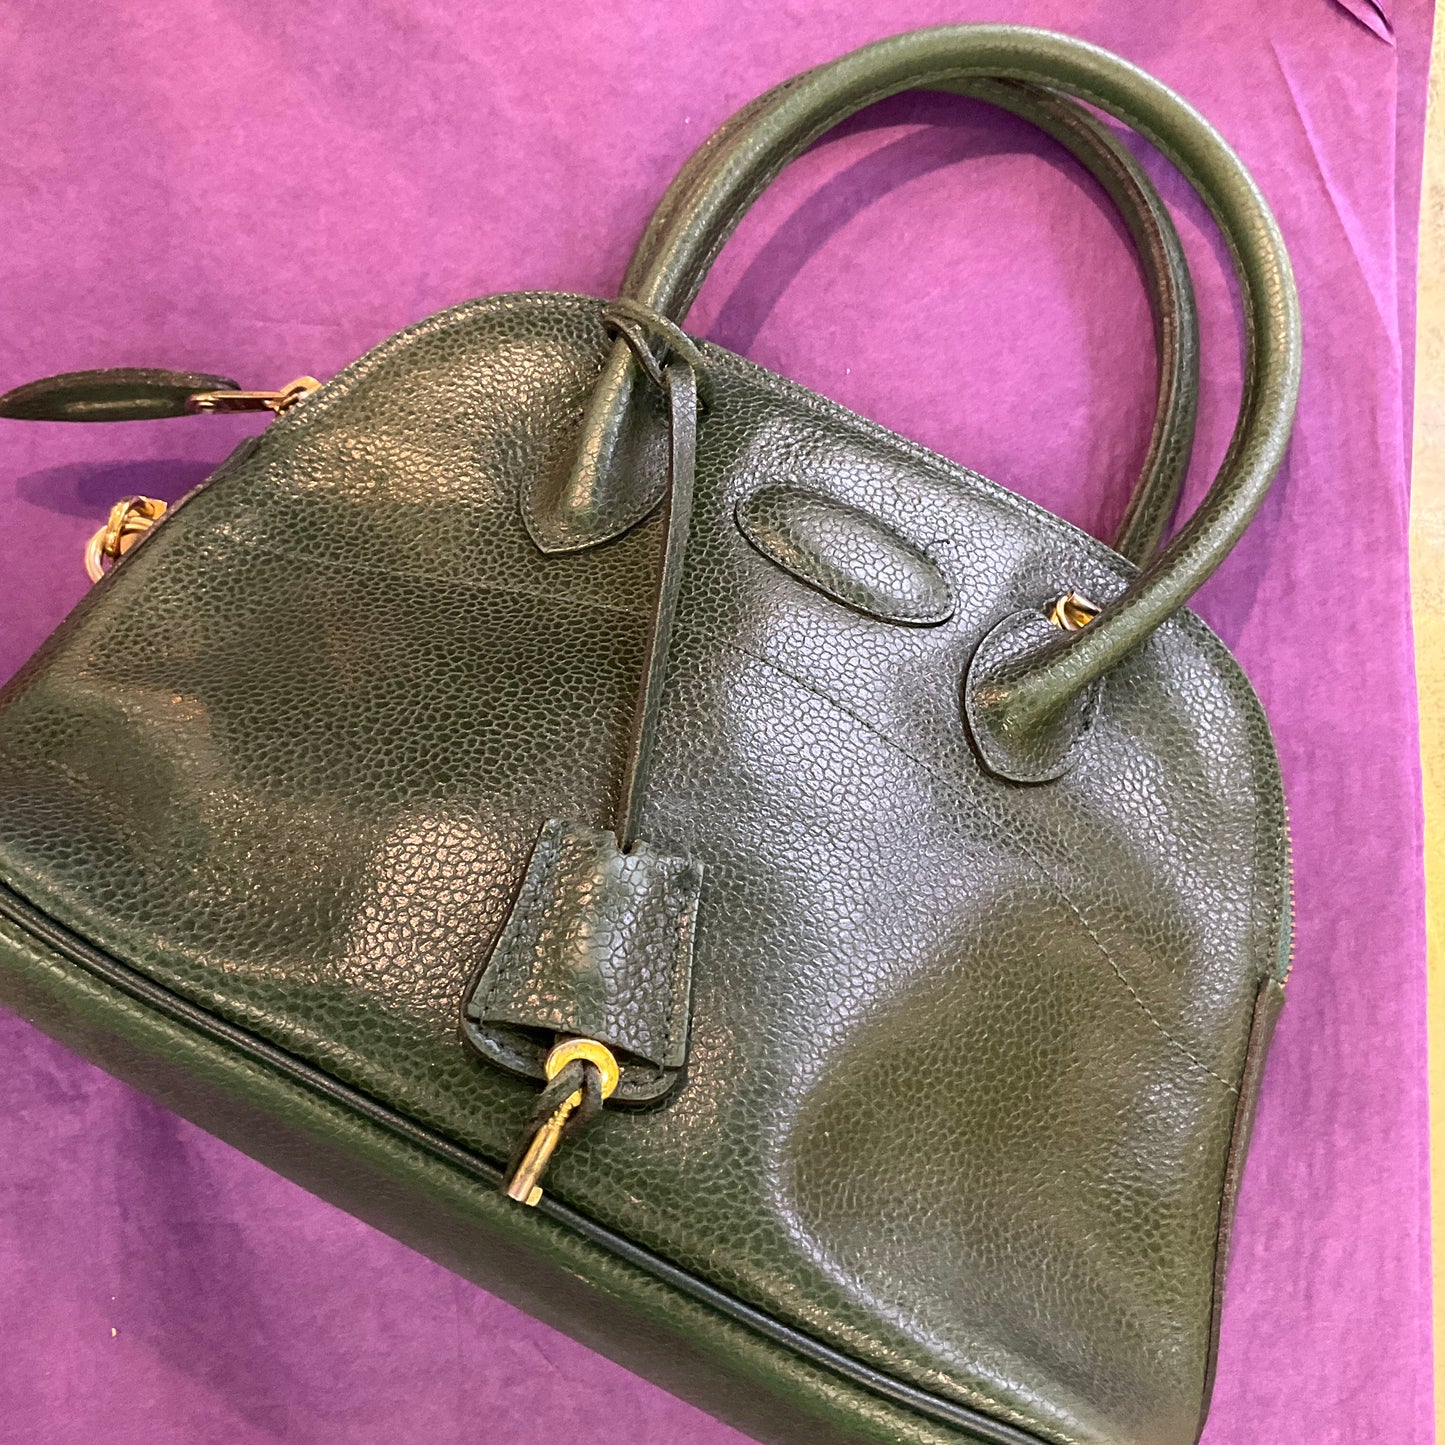 Vintage 1960s Retro Green Leather handbag, lock and key, vintage gift